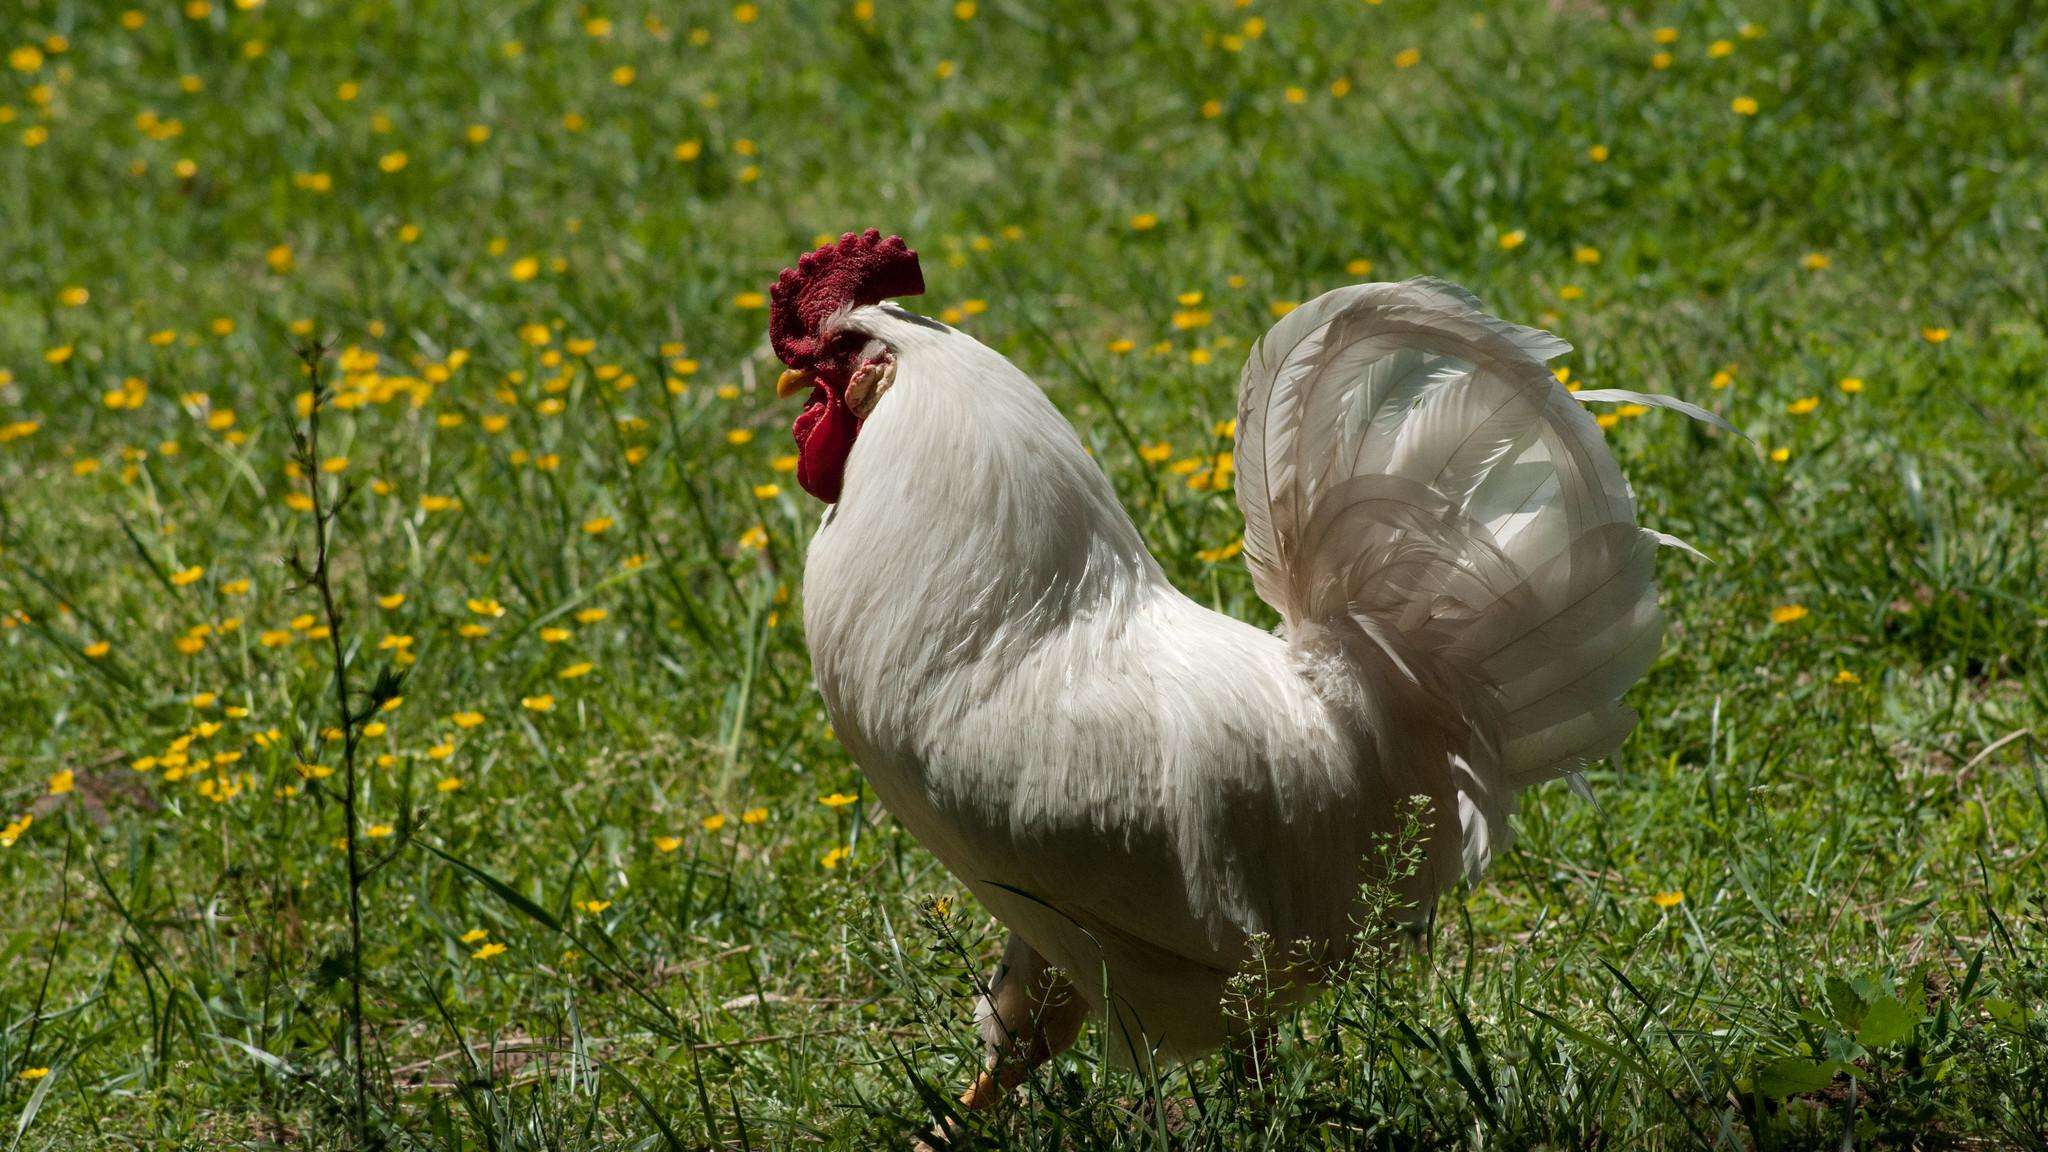 White chicken standing in a field